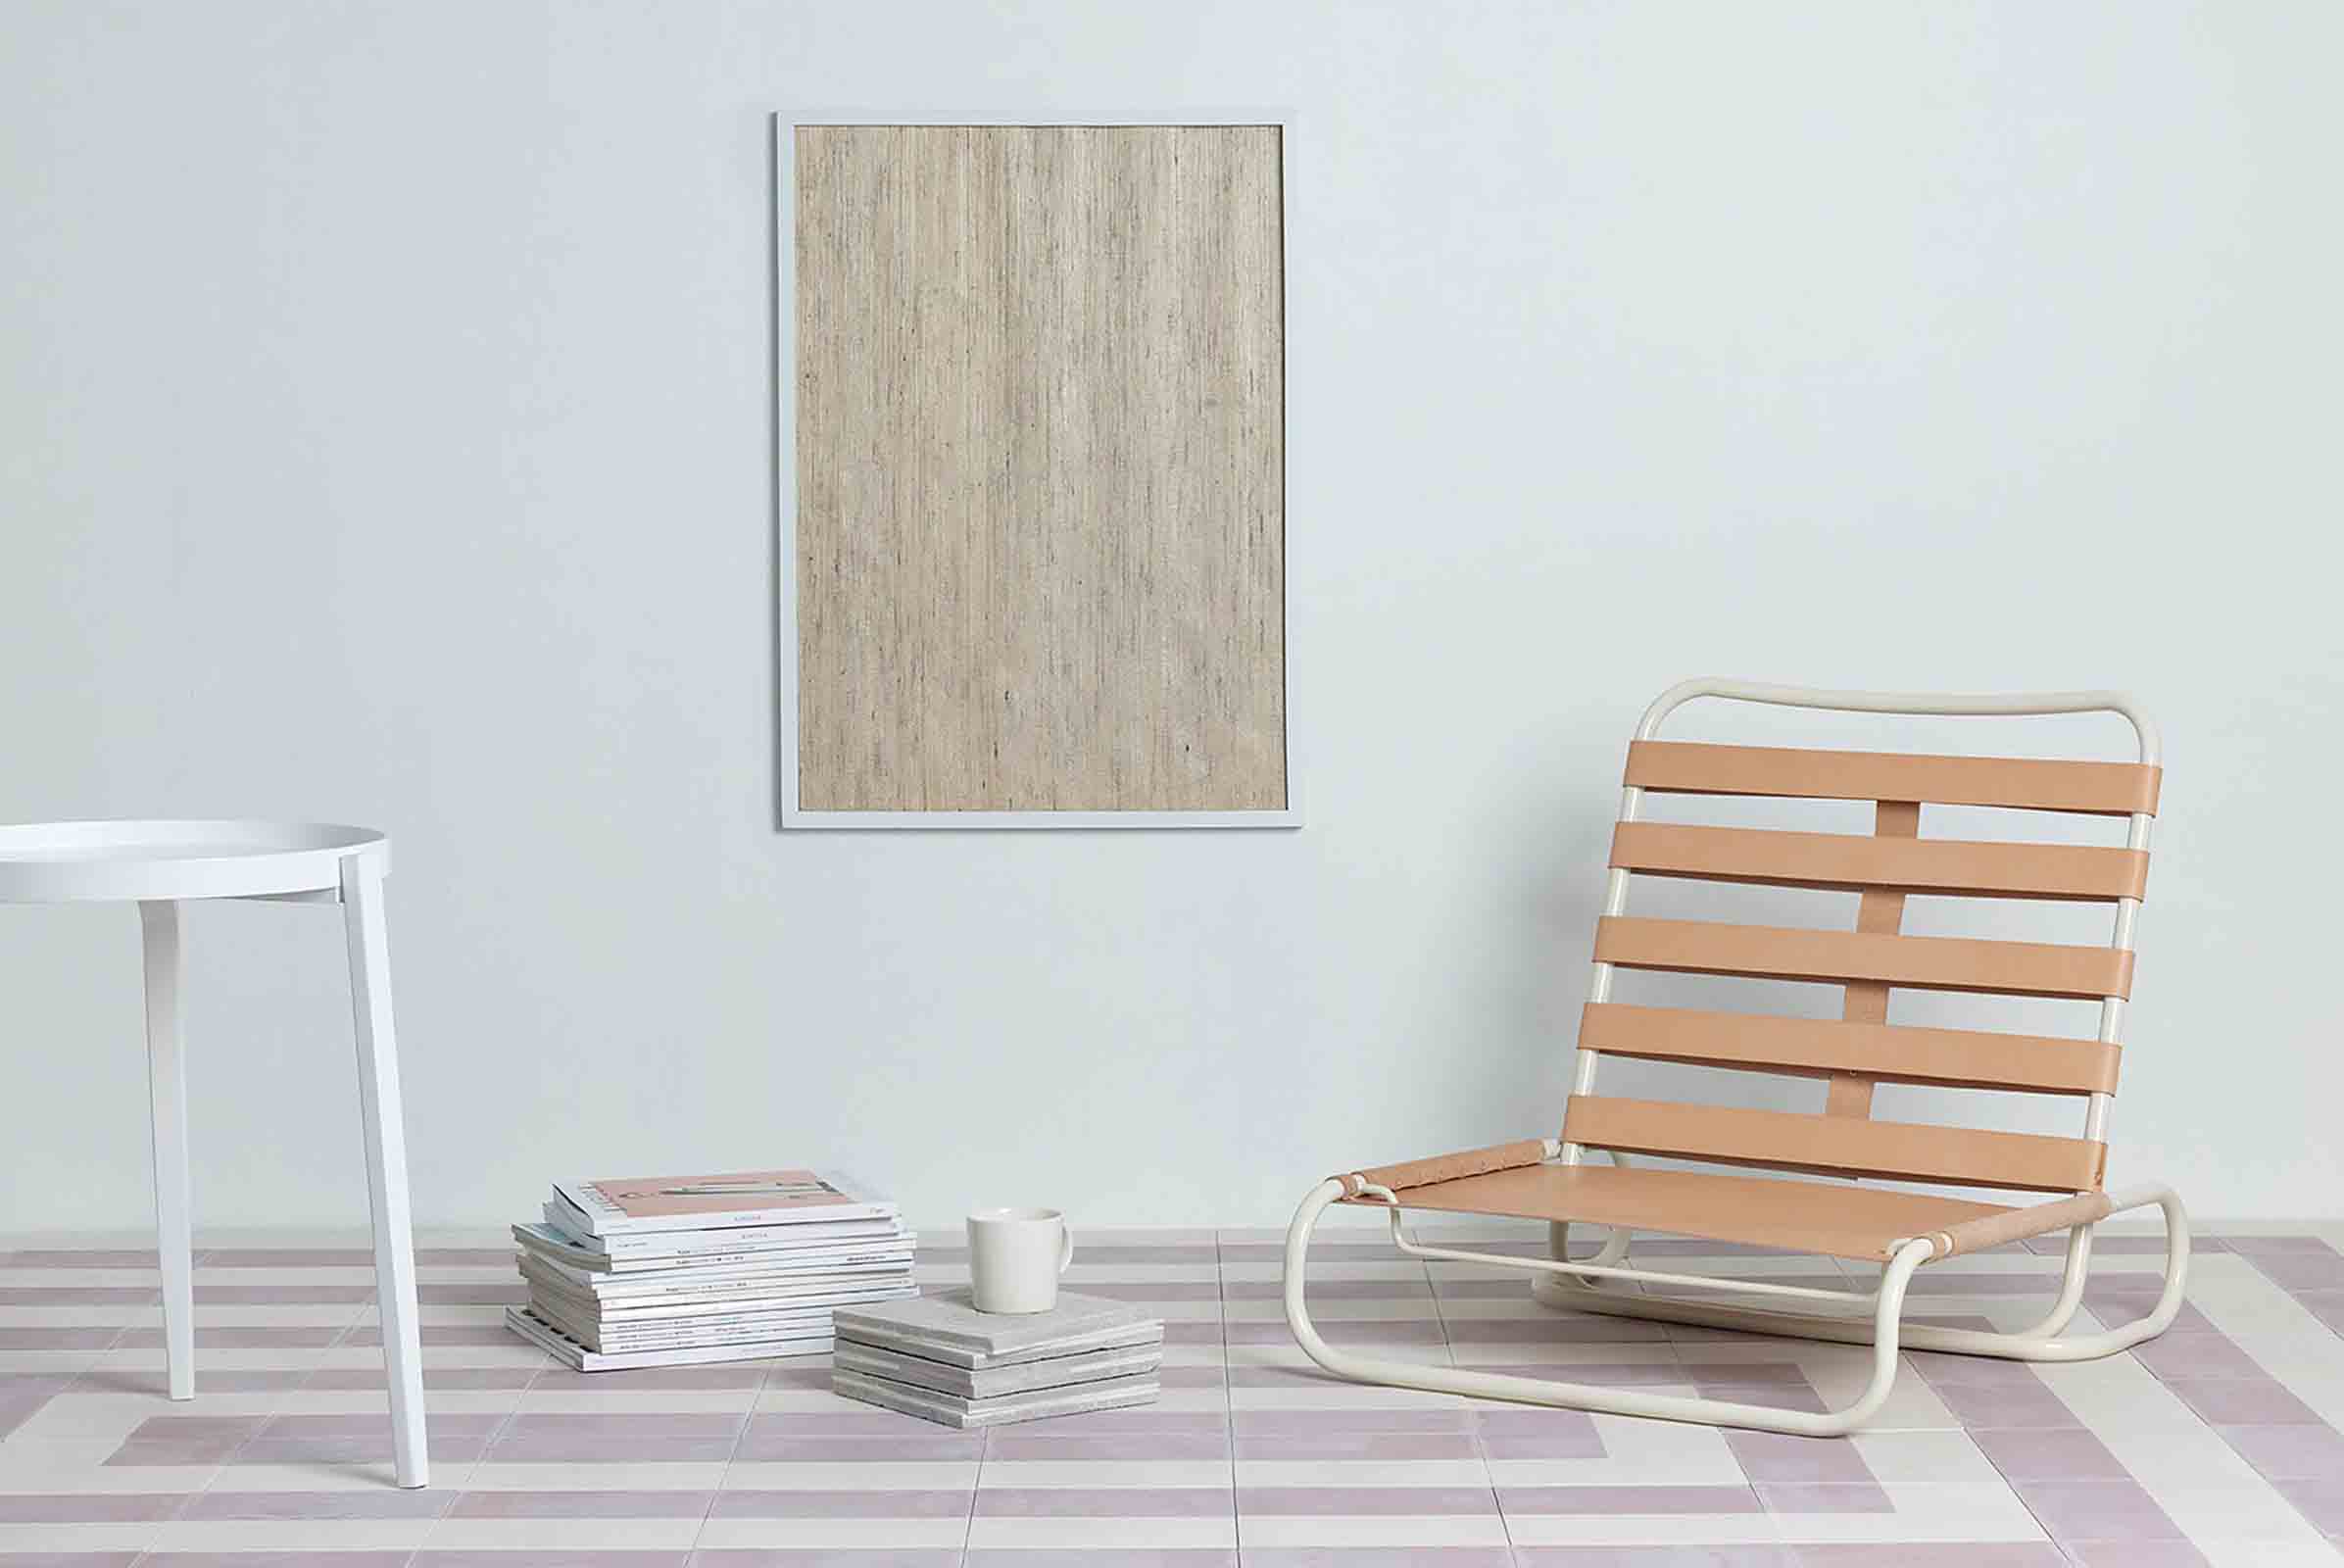 Chair and tiles by Australian designer Glen Baghurst as seen at Ventura Lambrate